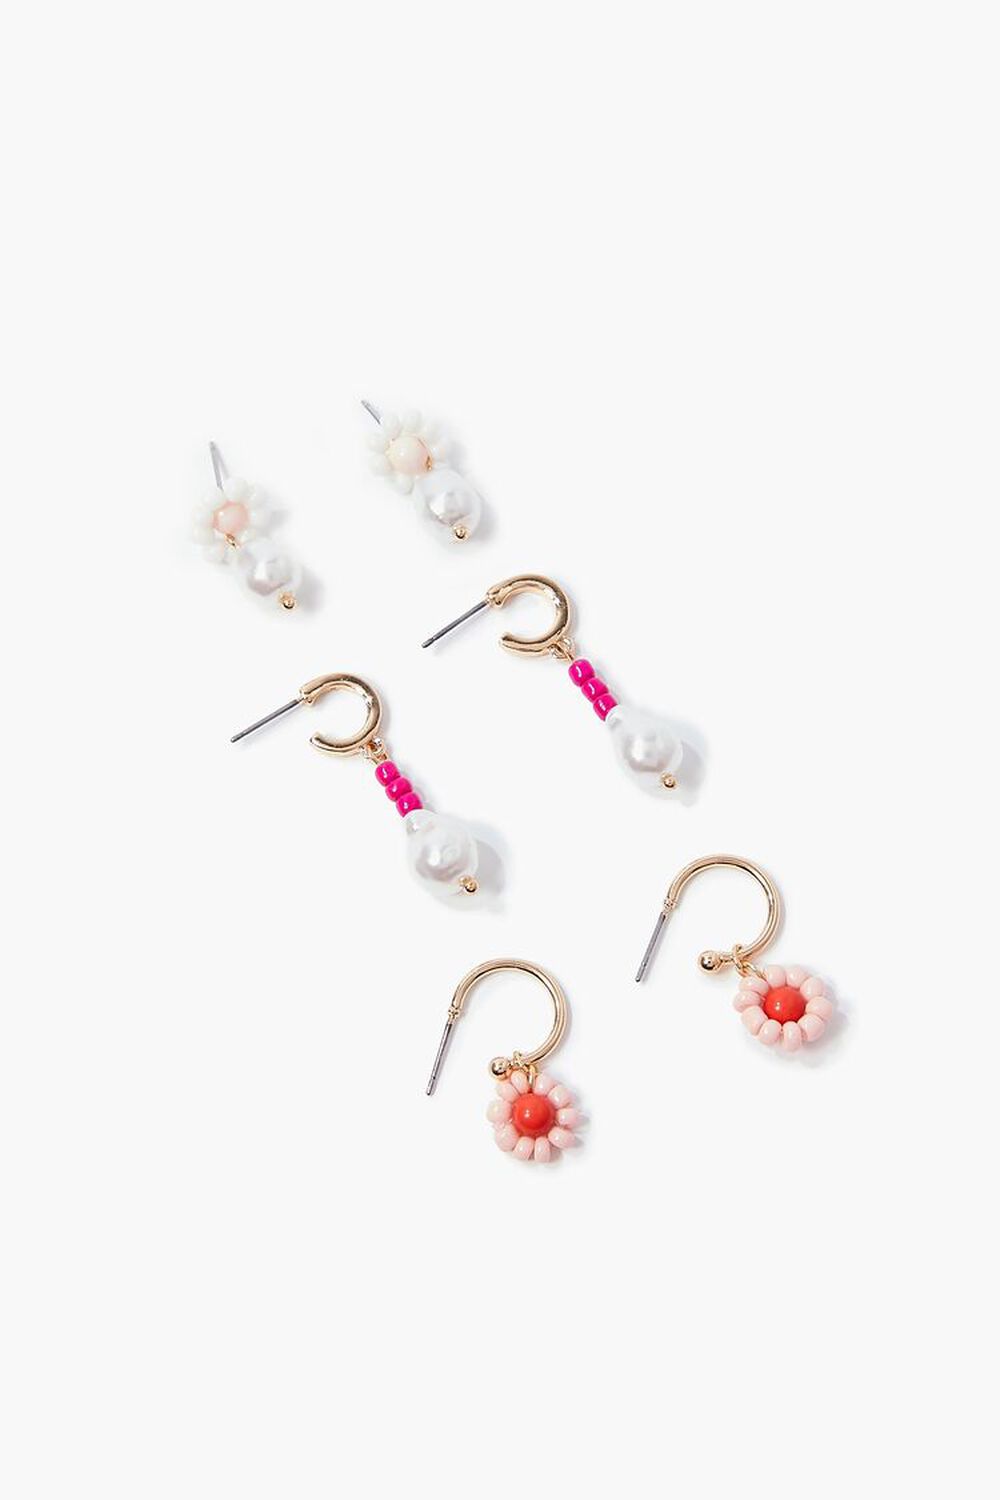 PINK/WHITE Beaded Floral Drop Earrings, image 1